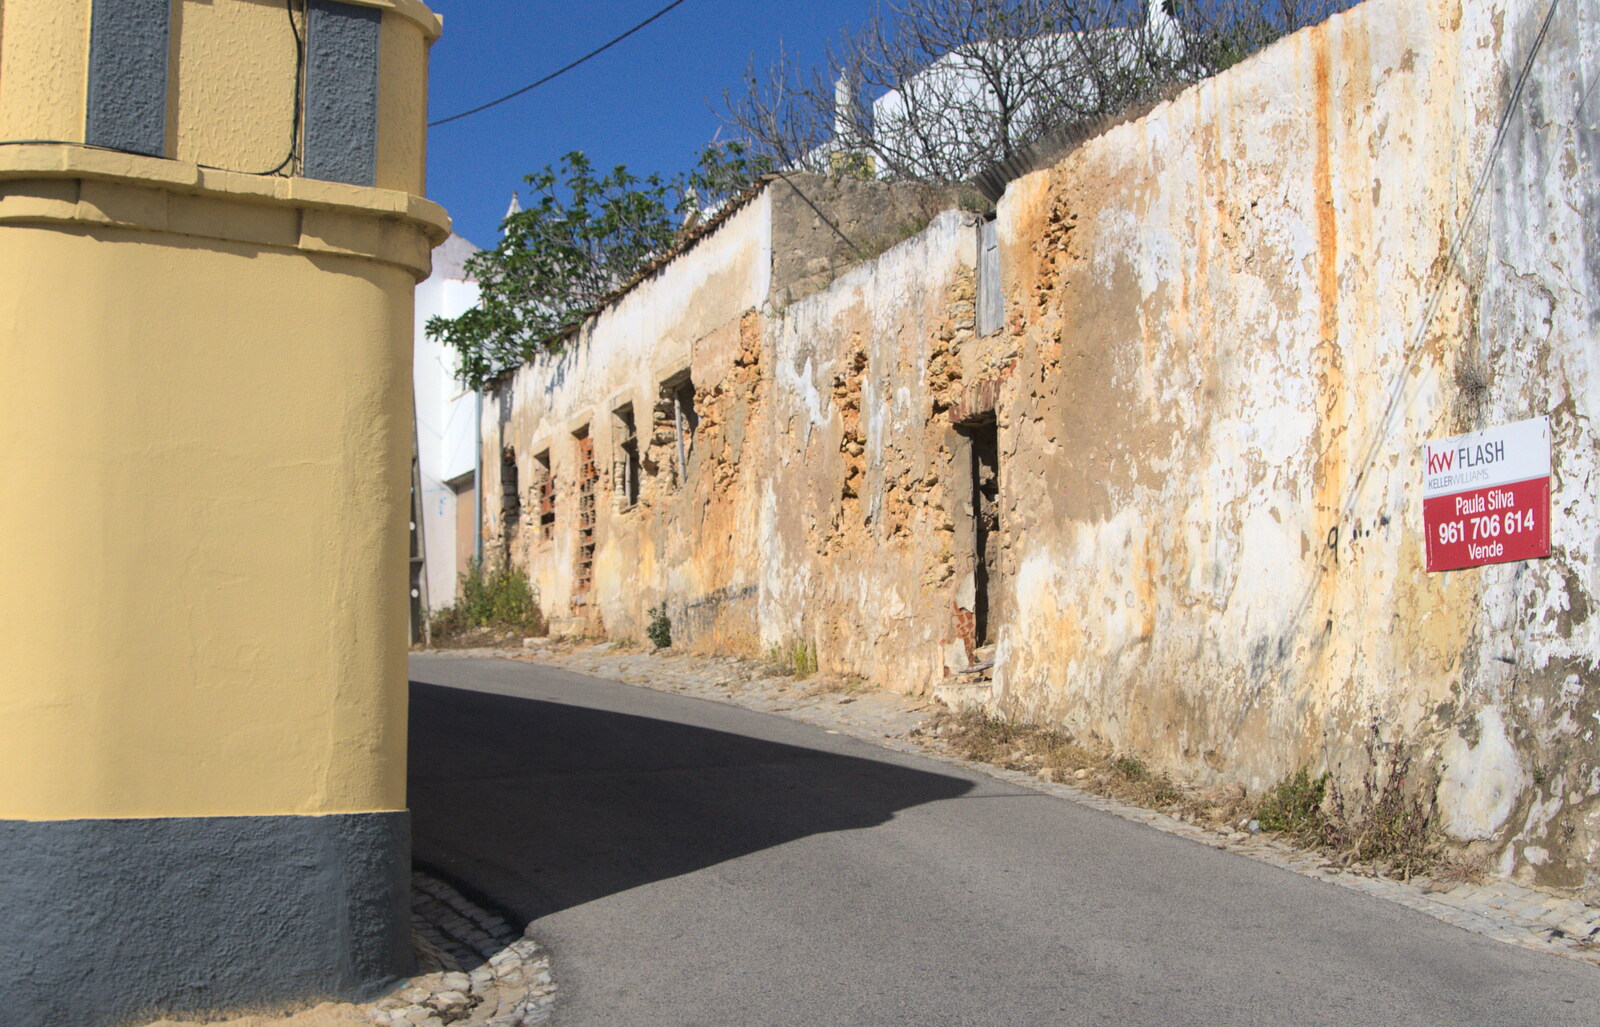 Crumbling walls from Gary and Vanessa's Barbeque, Alcantarilha, Algarve, Portugal - 7th April 2016